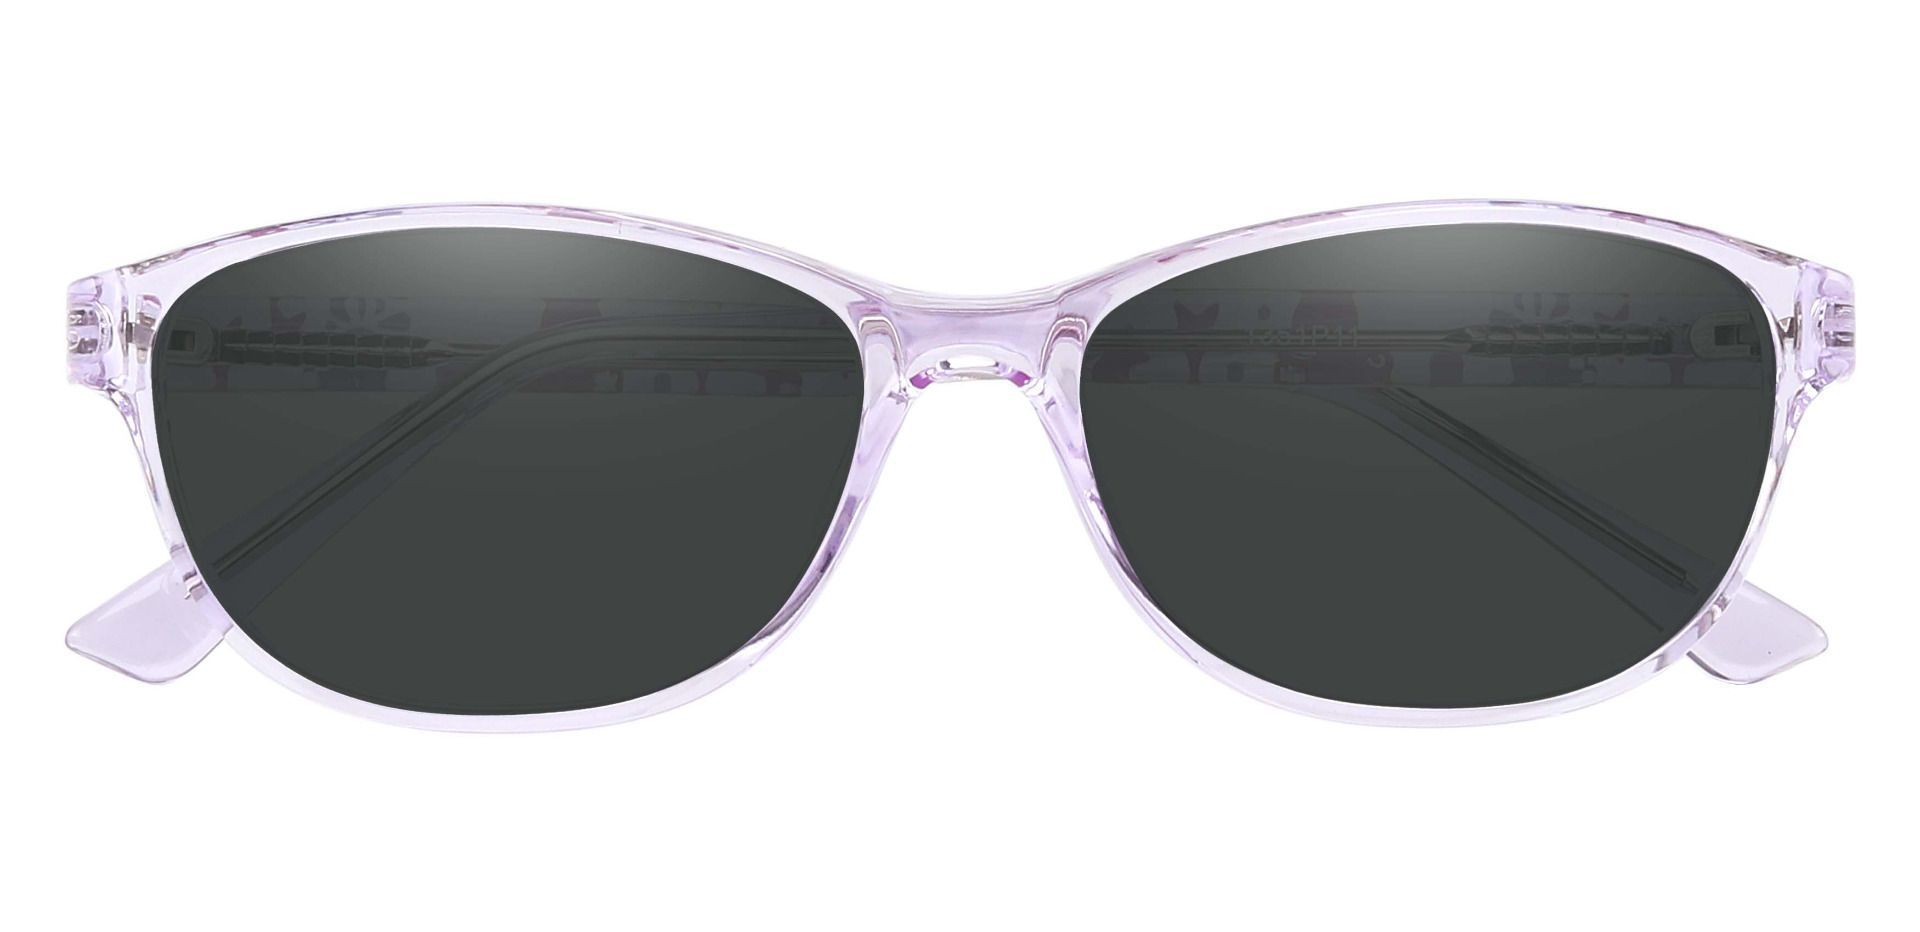 Patsy Oval Prescription Sunglasses - Purple Frame With Gray Lenses